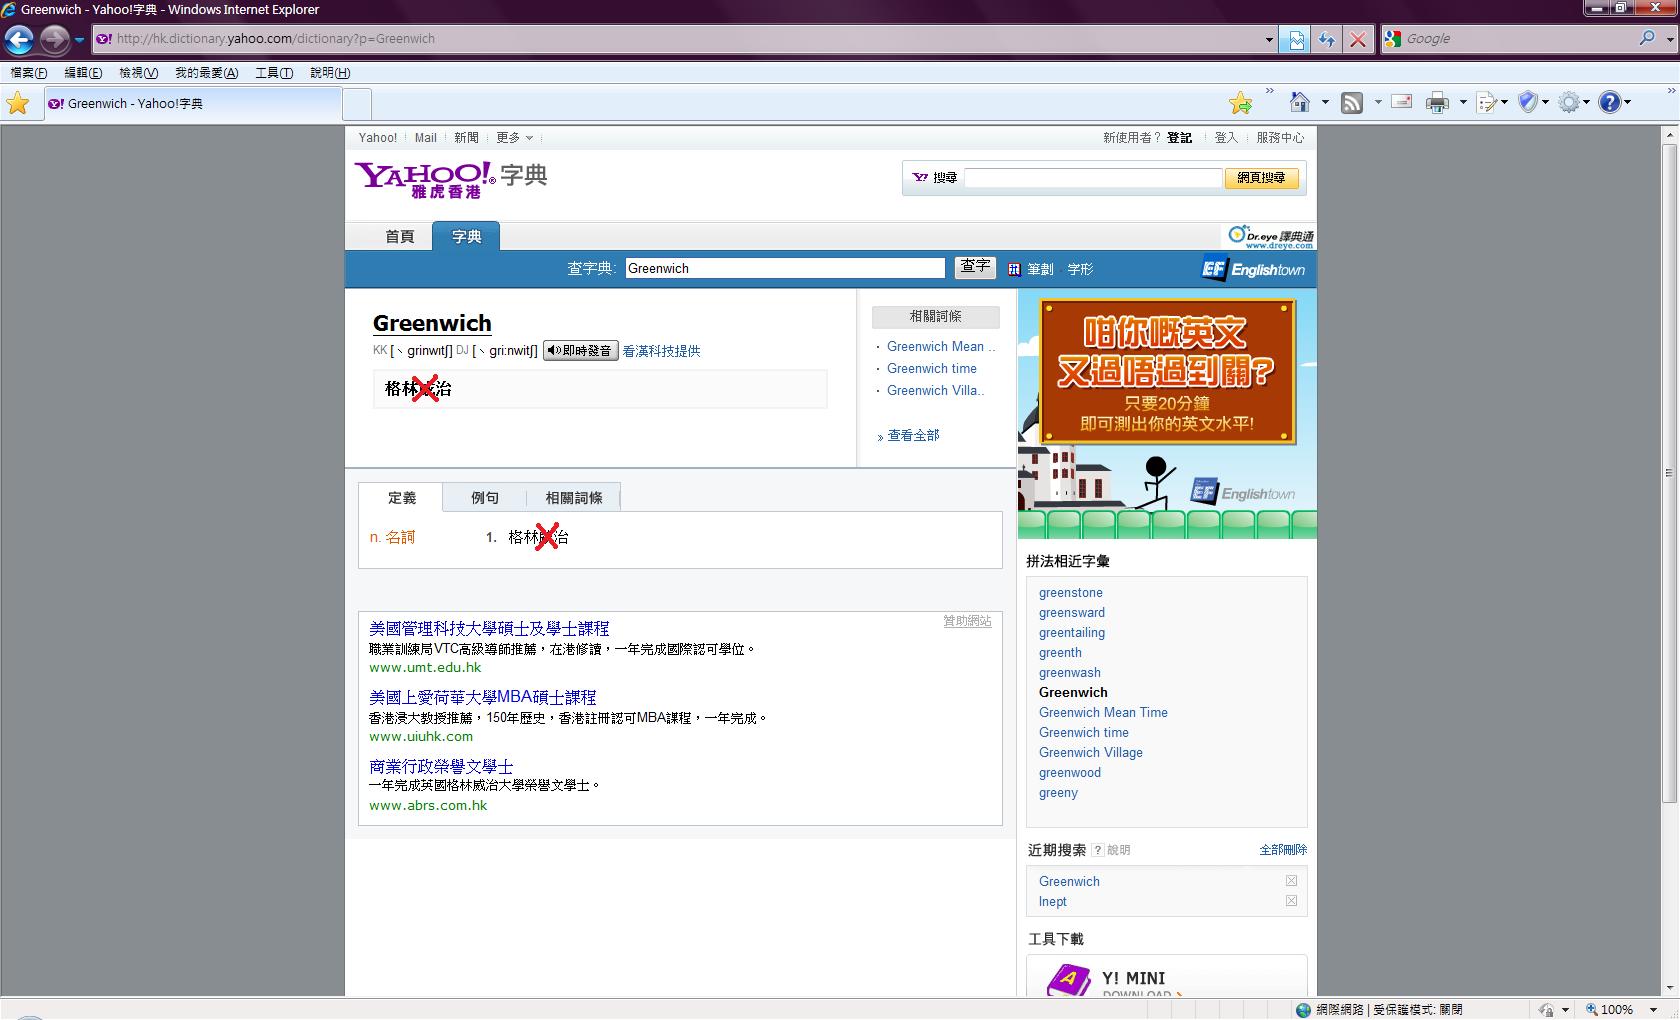 Yahoo字典網頁